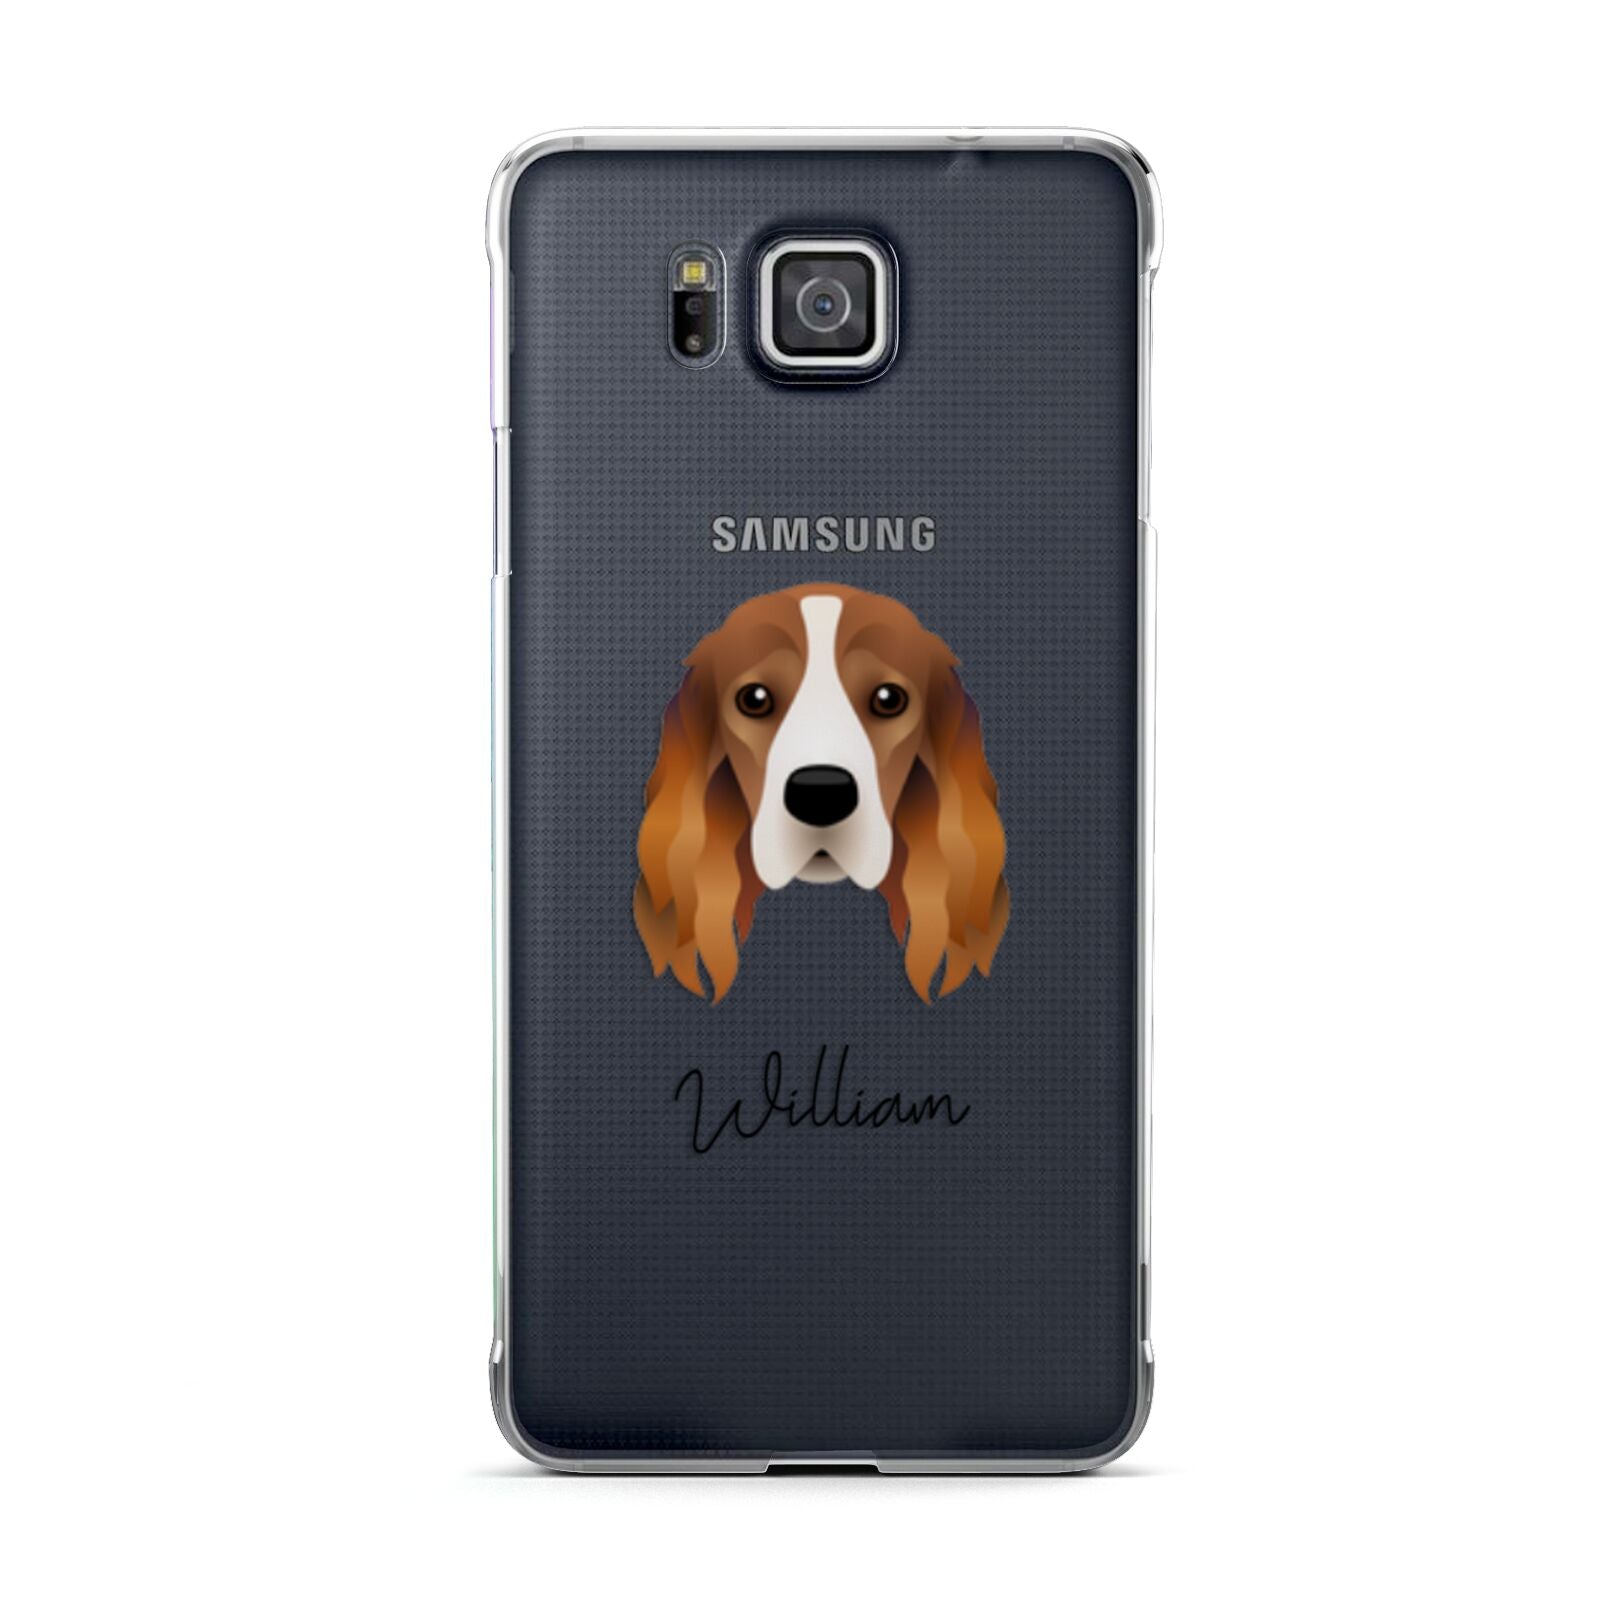 Cocker Spaniel Personalised Samsung Galaxy Alpha Case